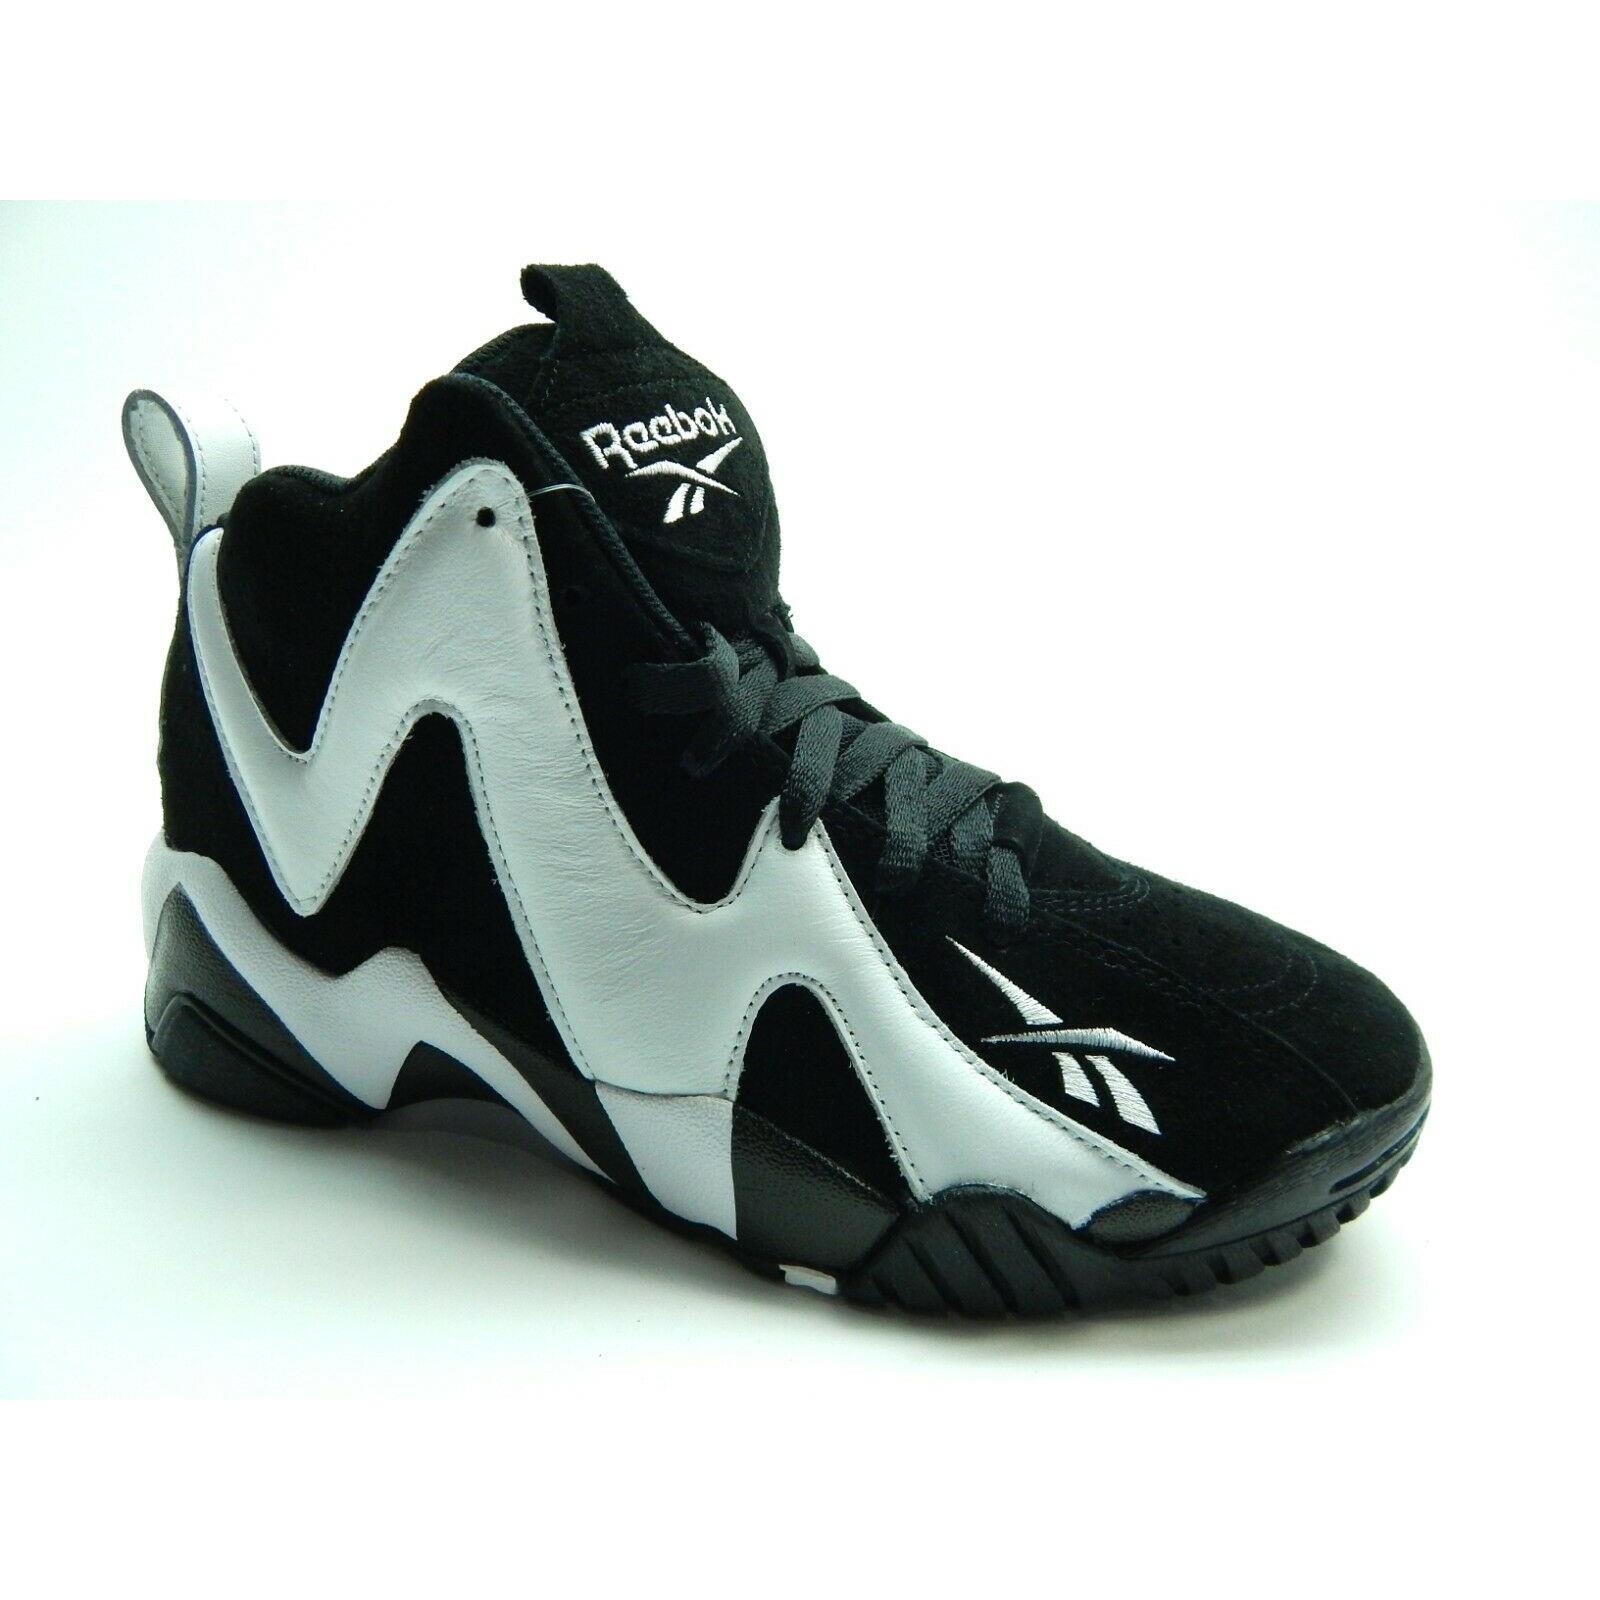 Reebok Kamikaze II Black White FV2969 Basketball Men Shoes Size 7.5